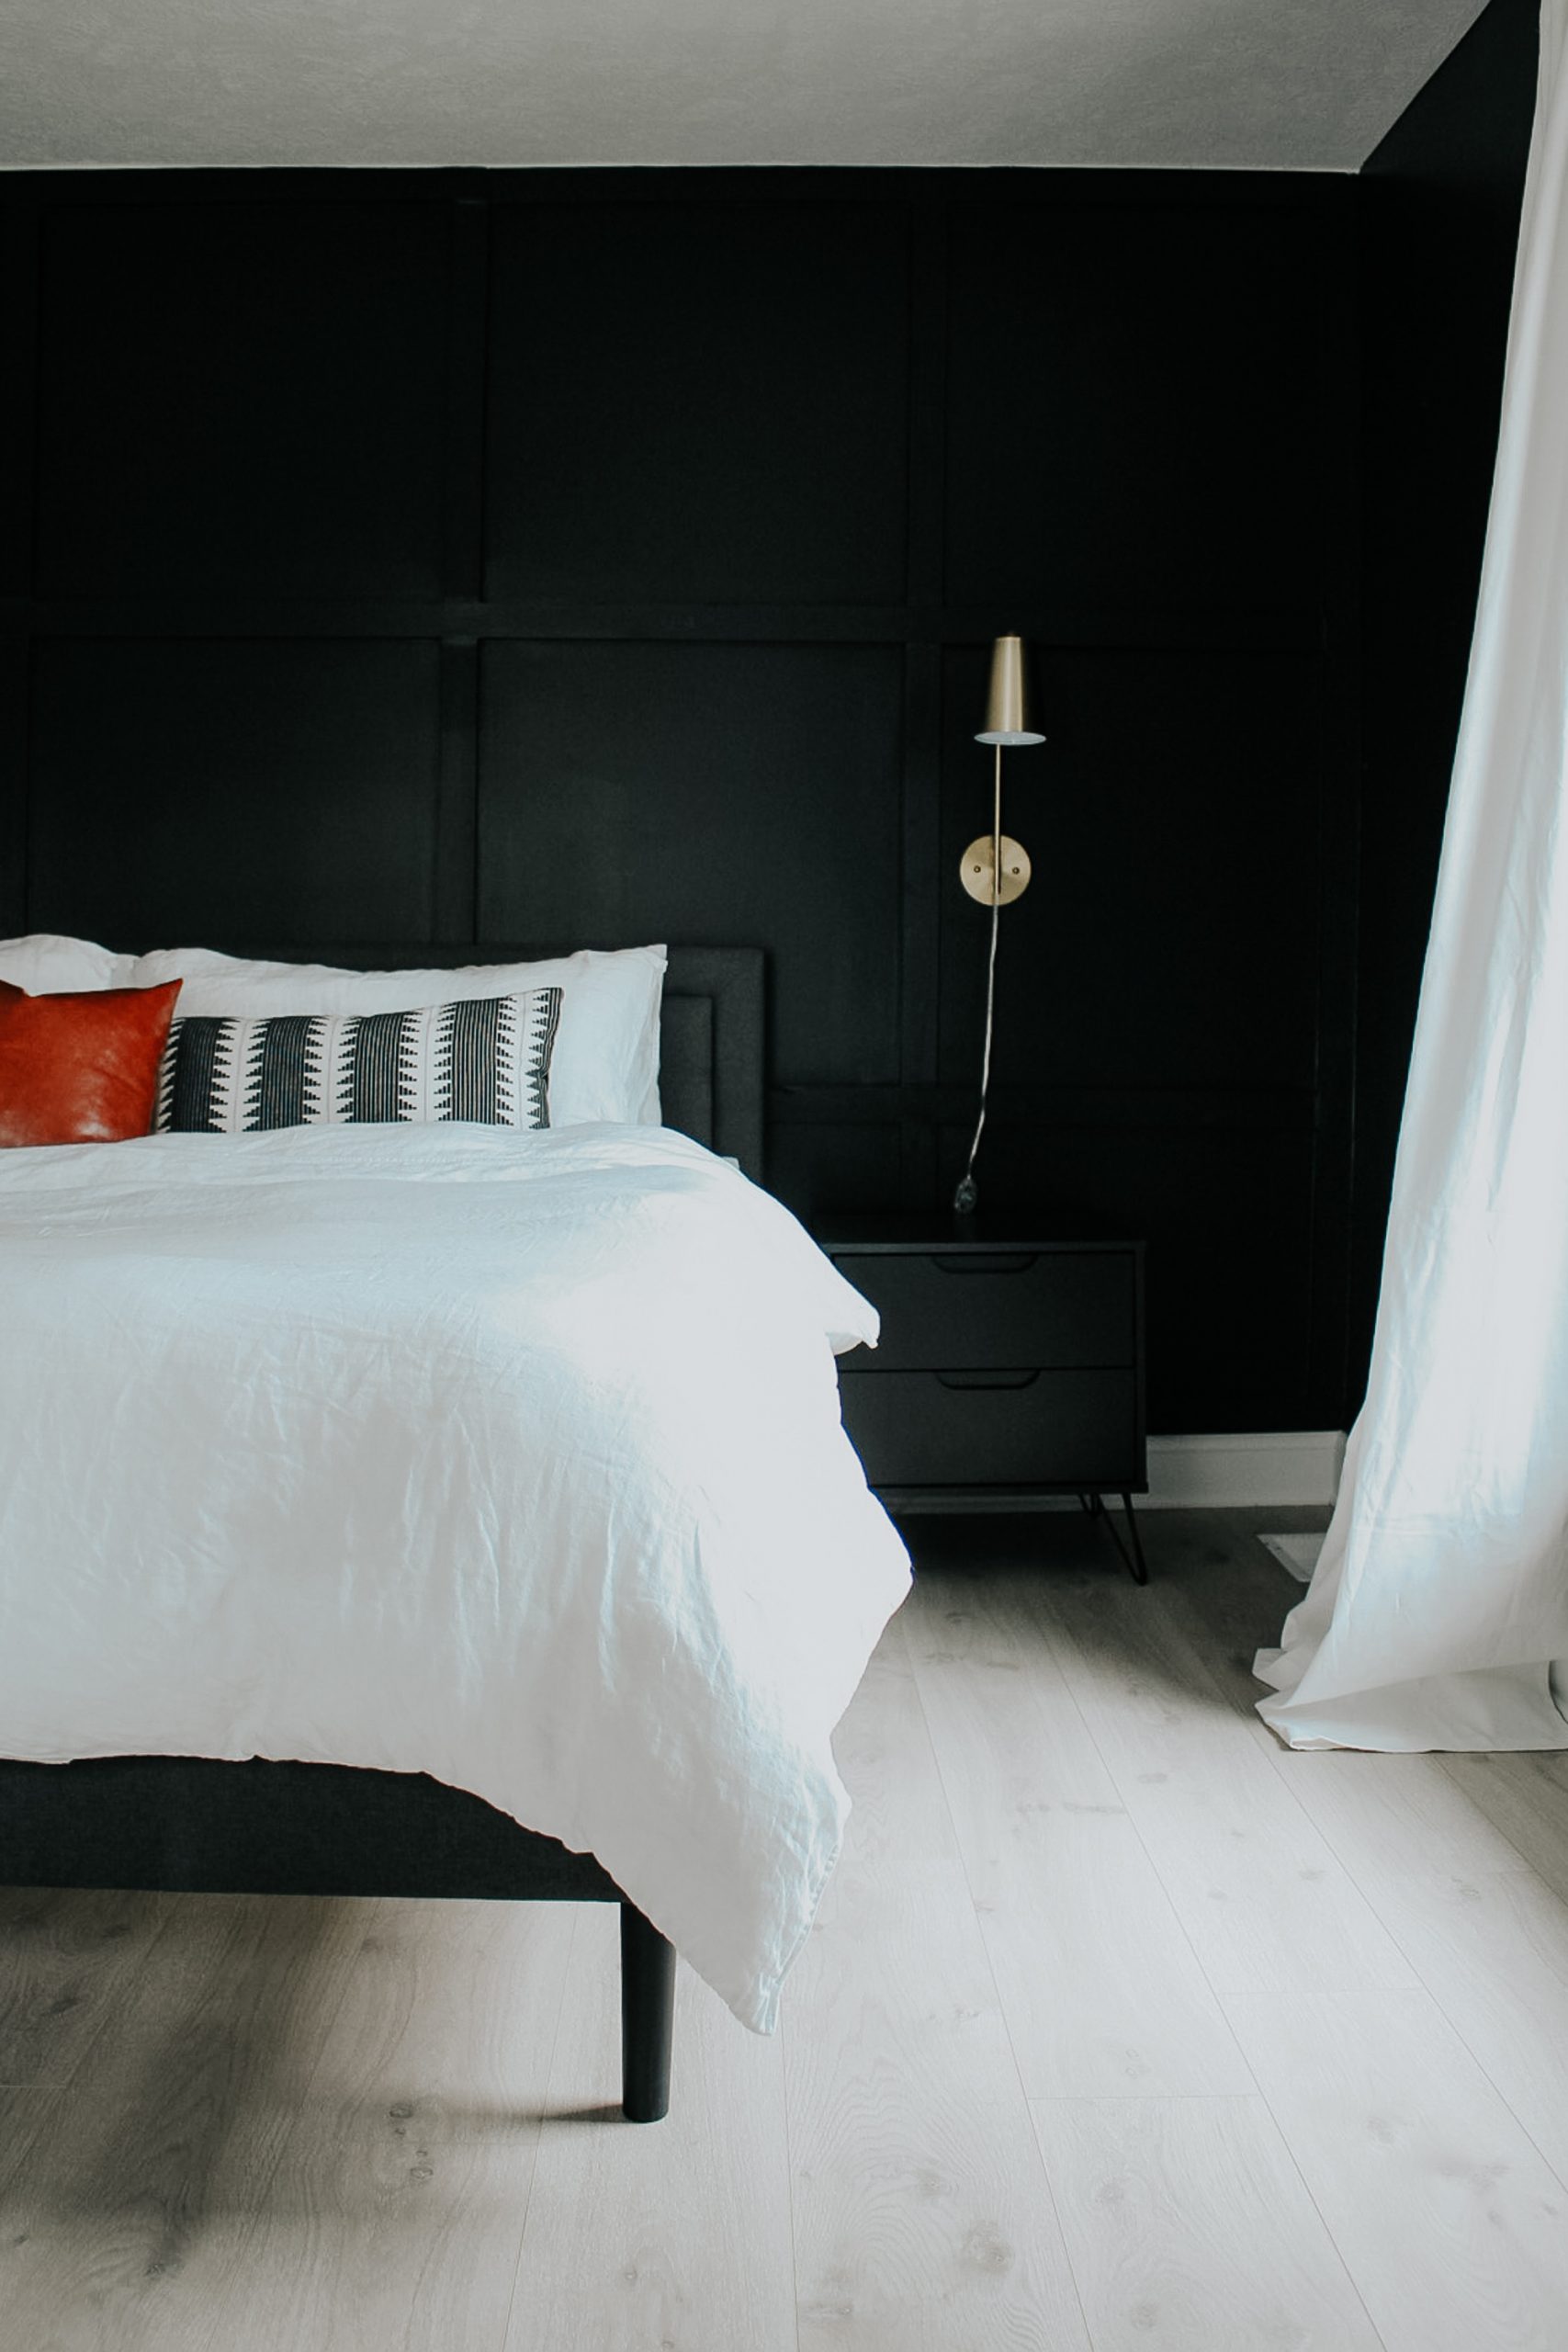 ORC Week Three: The Most Comfortable & Affordable Linen Bedding | Miranda Schroeder Blog

www.mirandaschroeder.com